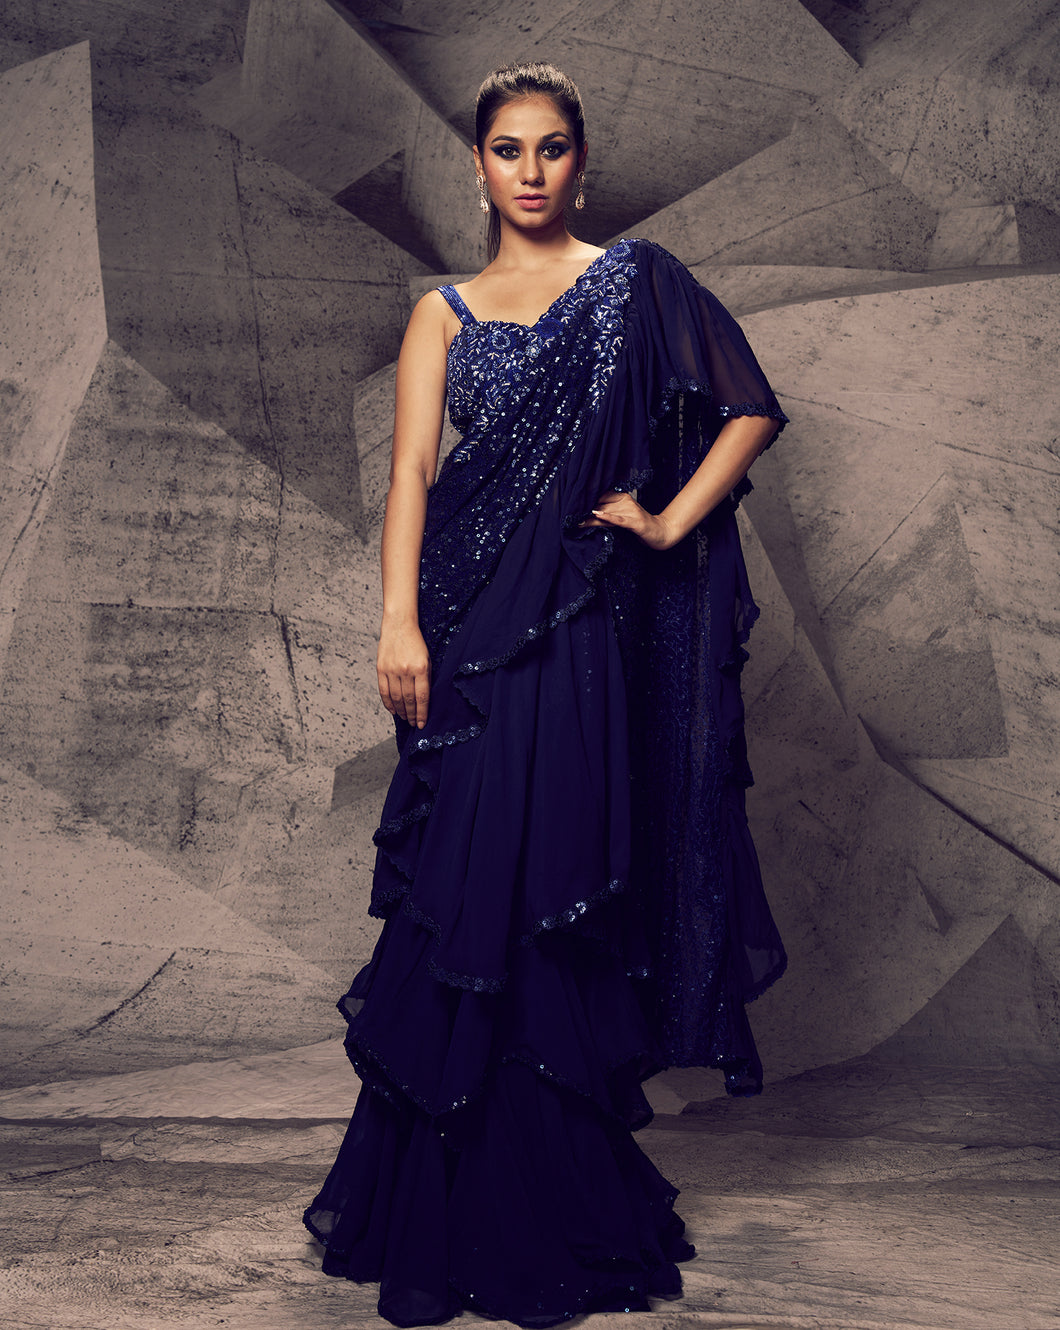 The Shimmering Blue Layered Sari